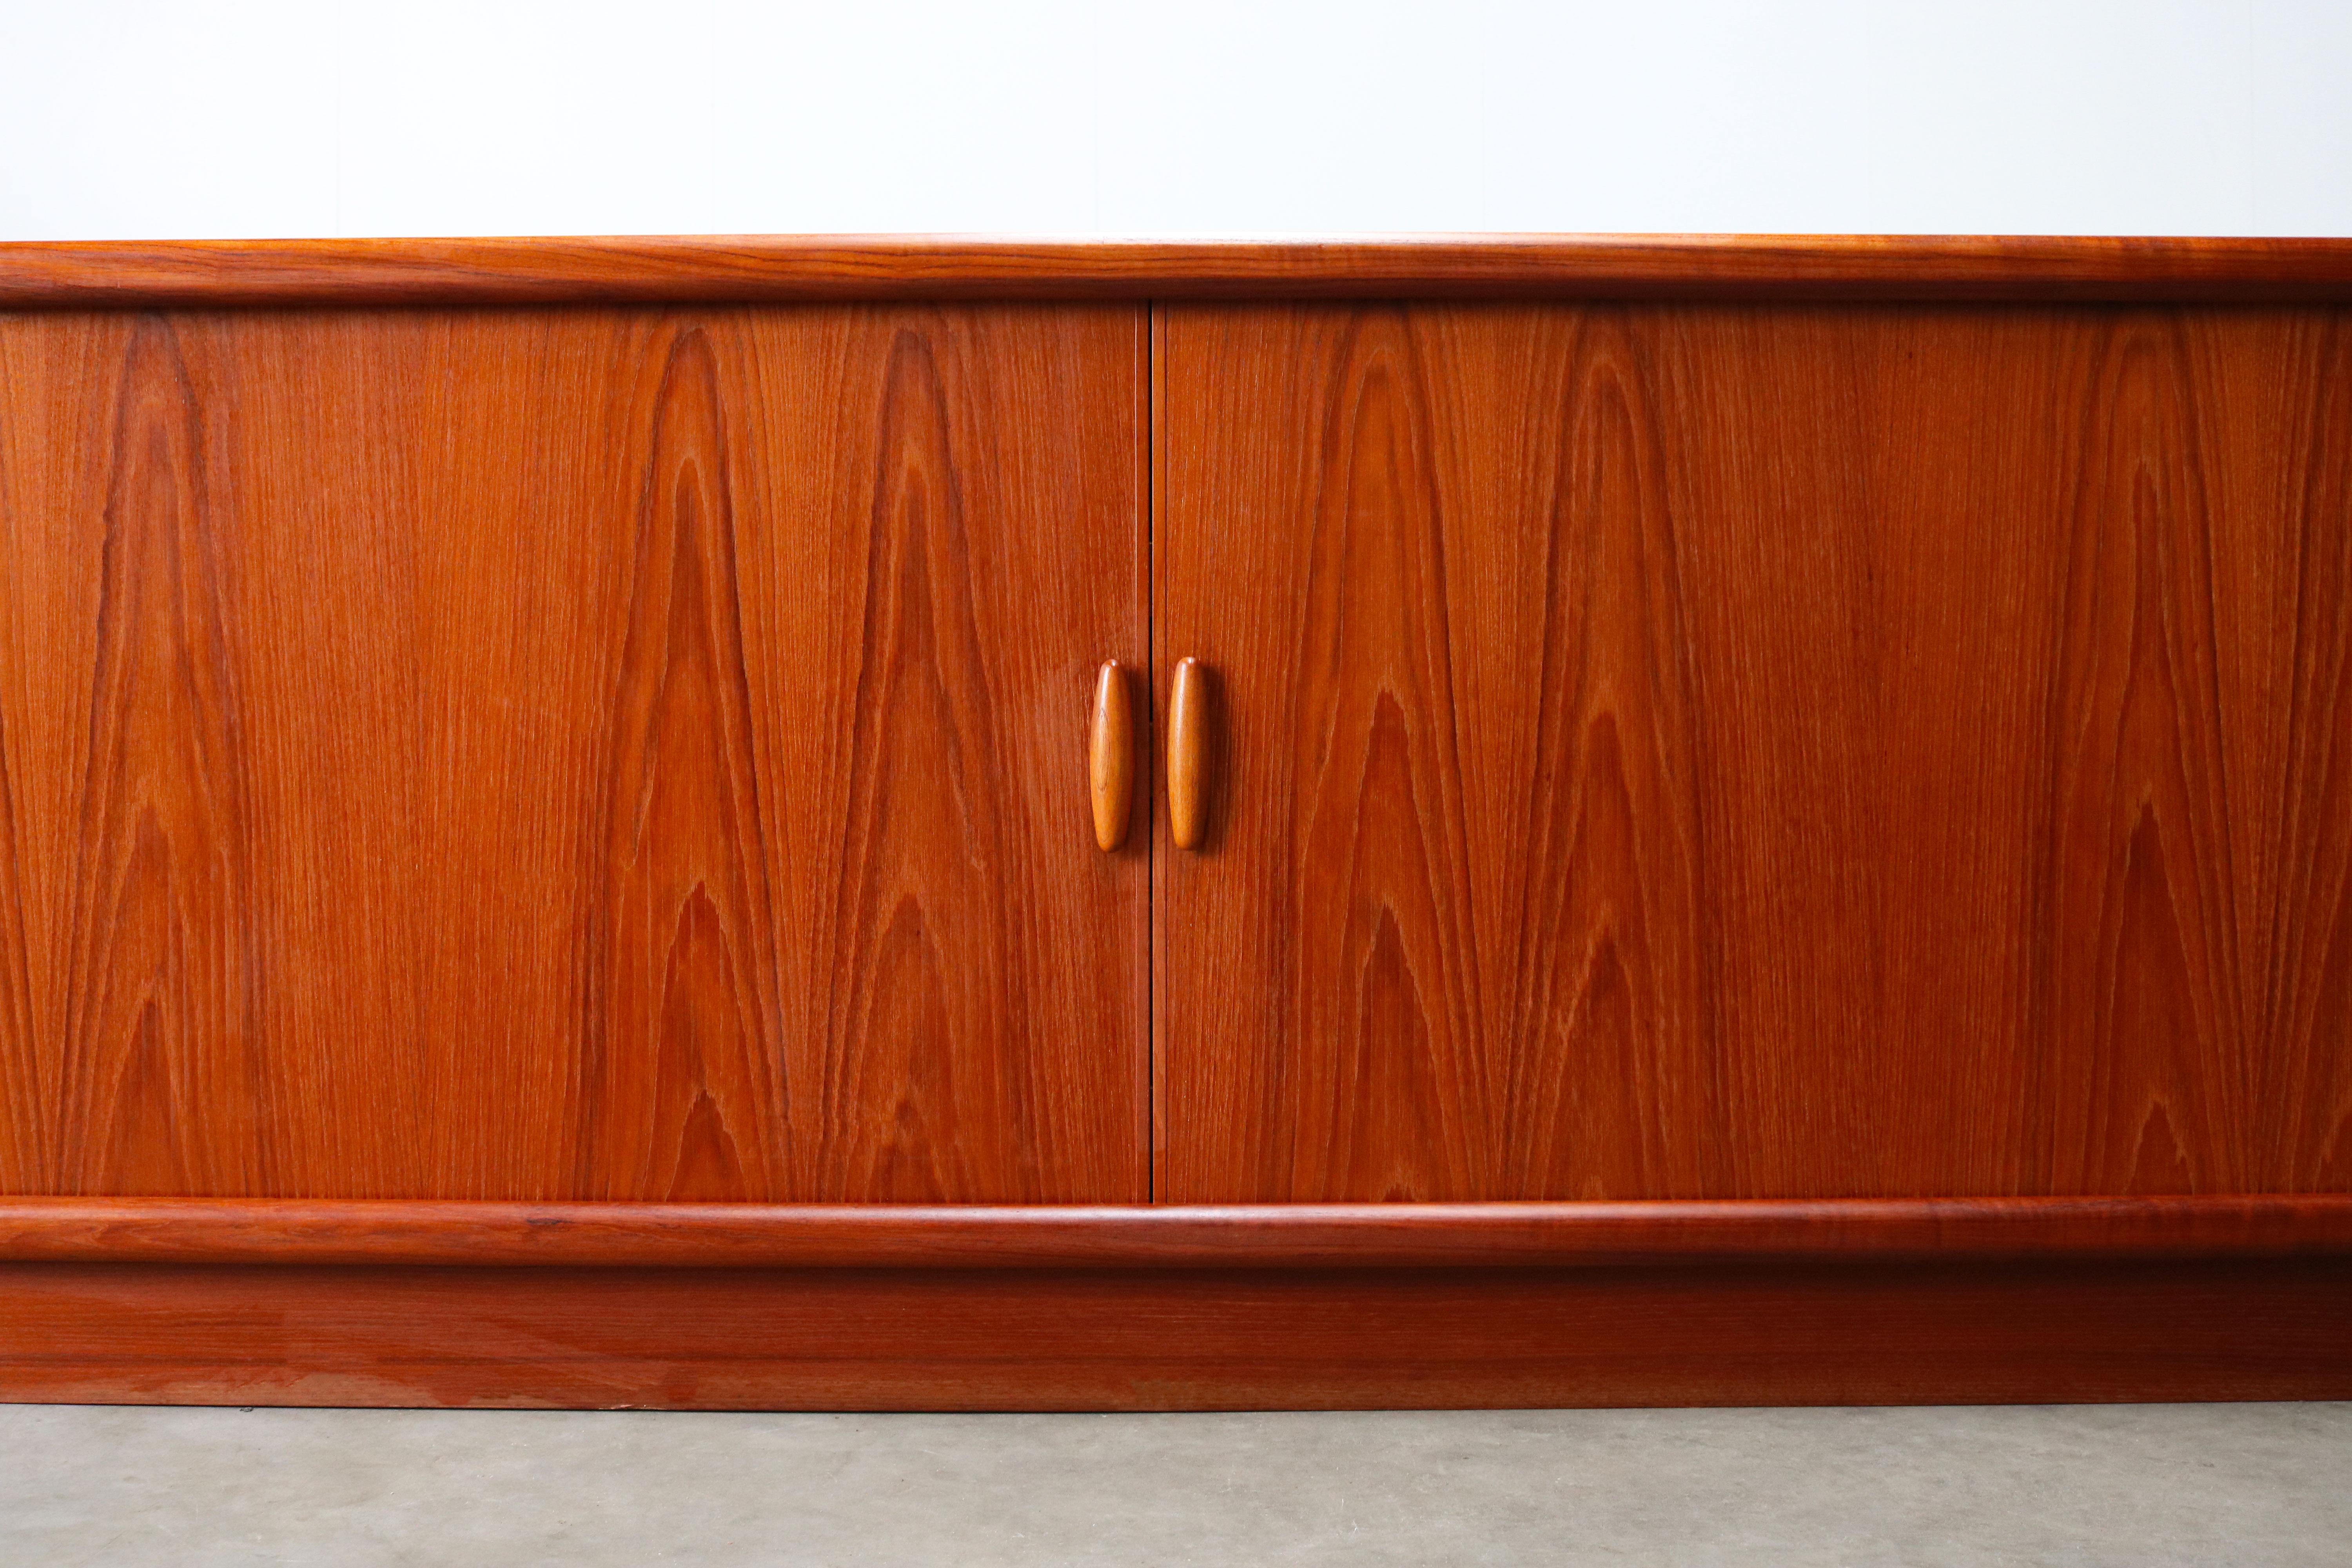 Danish Design Credenza / Sideboard by Dyrlund 1950s Teak Organic Tambour Doors 2